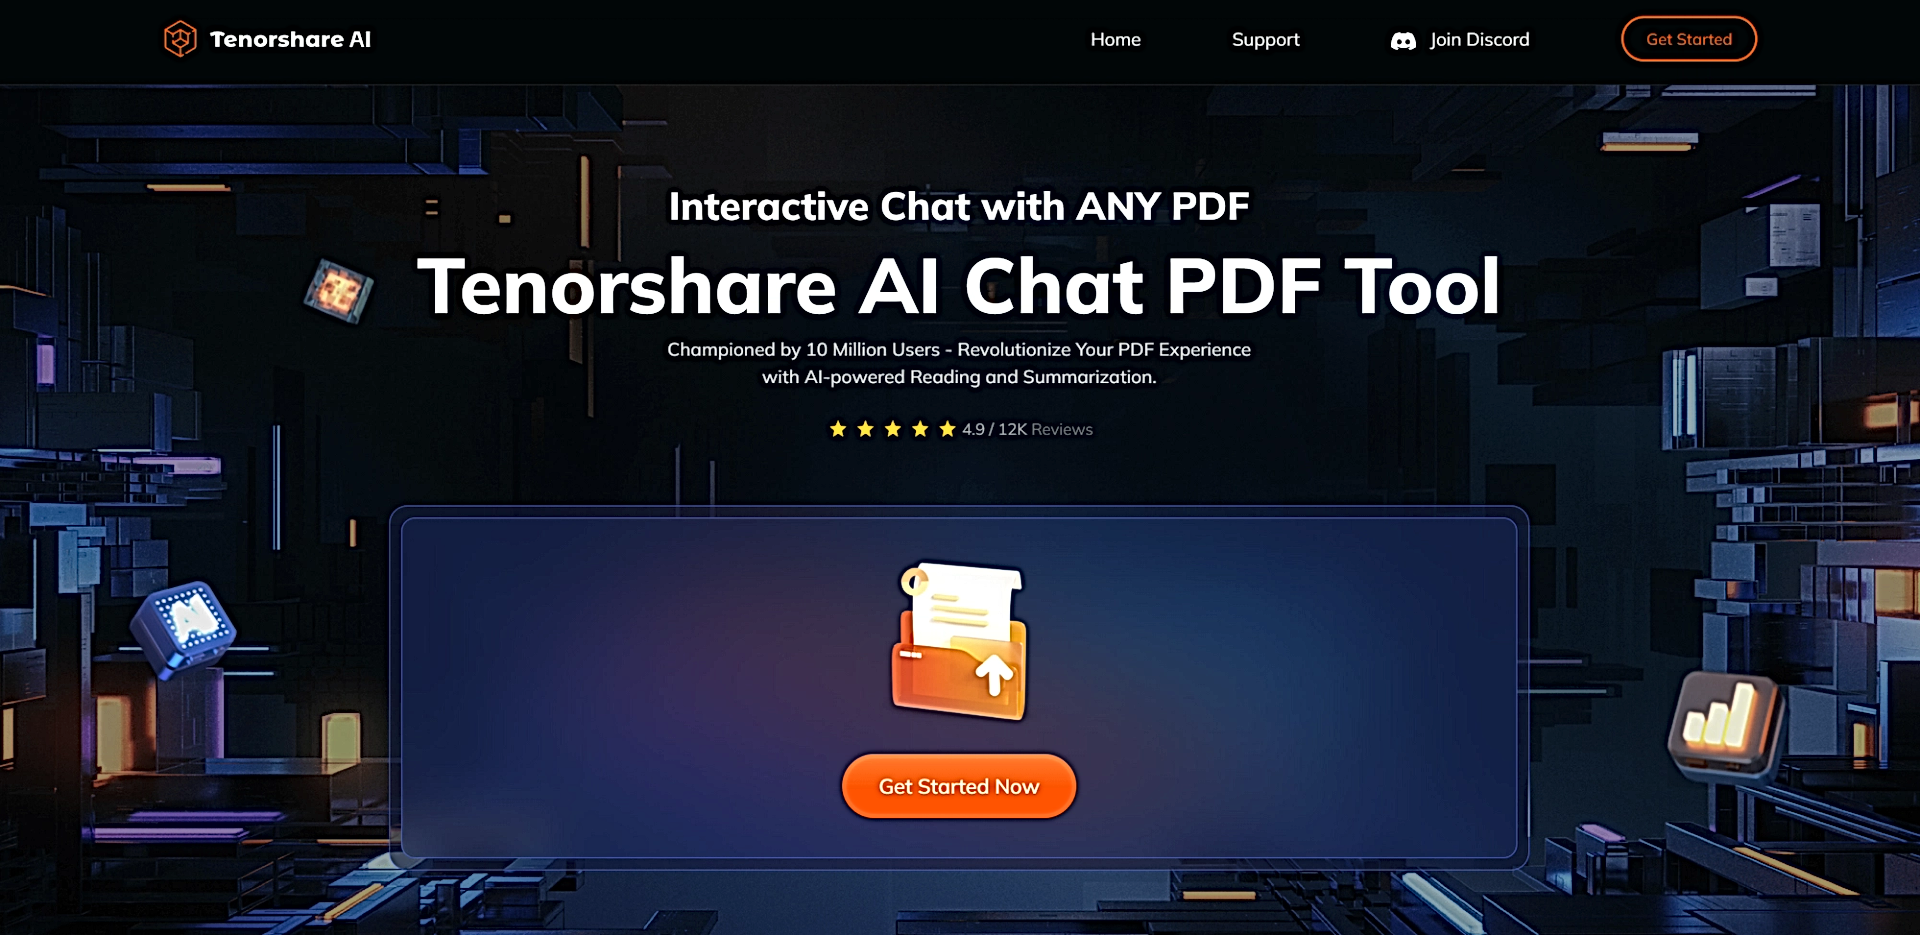 Tenorshare AI featured